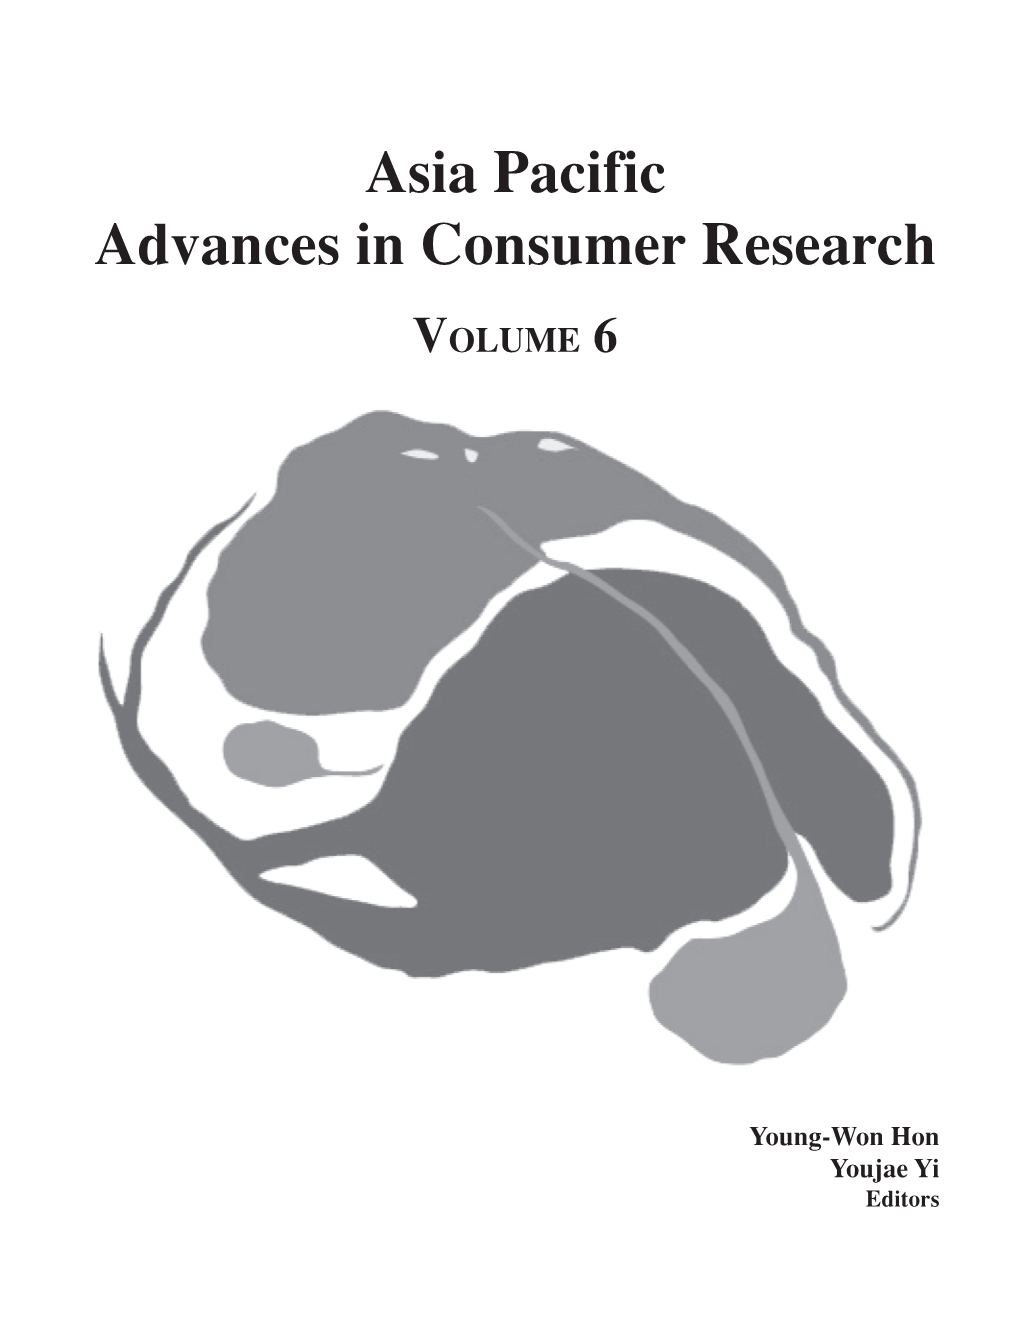 Asia Pacific Advances in Consumer Research